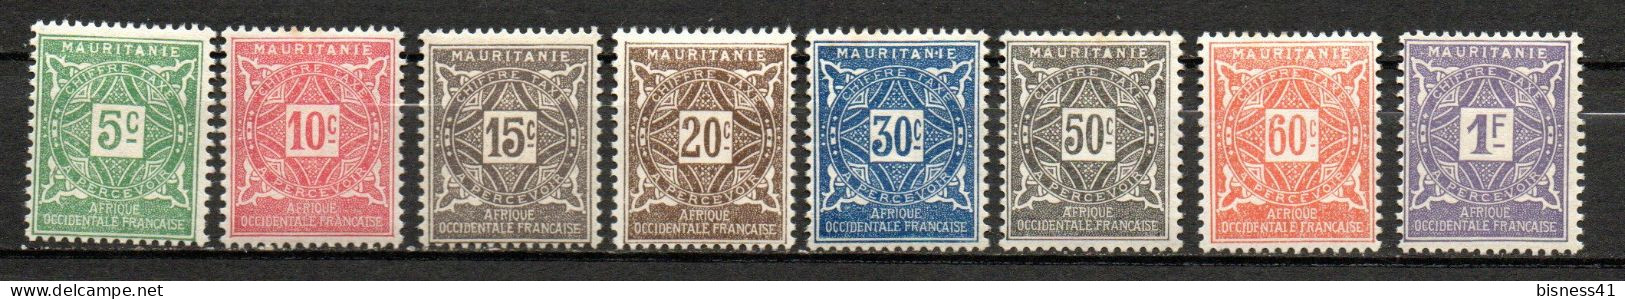 Col33  Colonie Mauritanie Taxe N° 17 à 24 Neuf X MH  Cote : 9,25€ - Usados